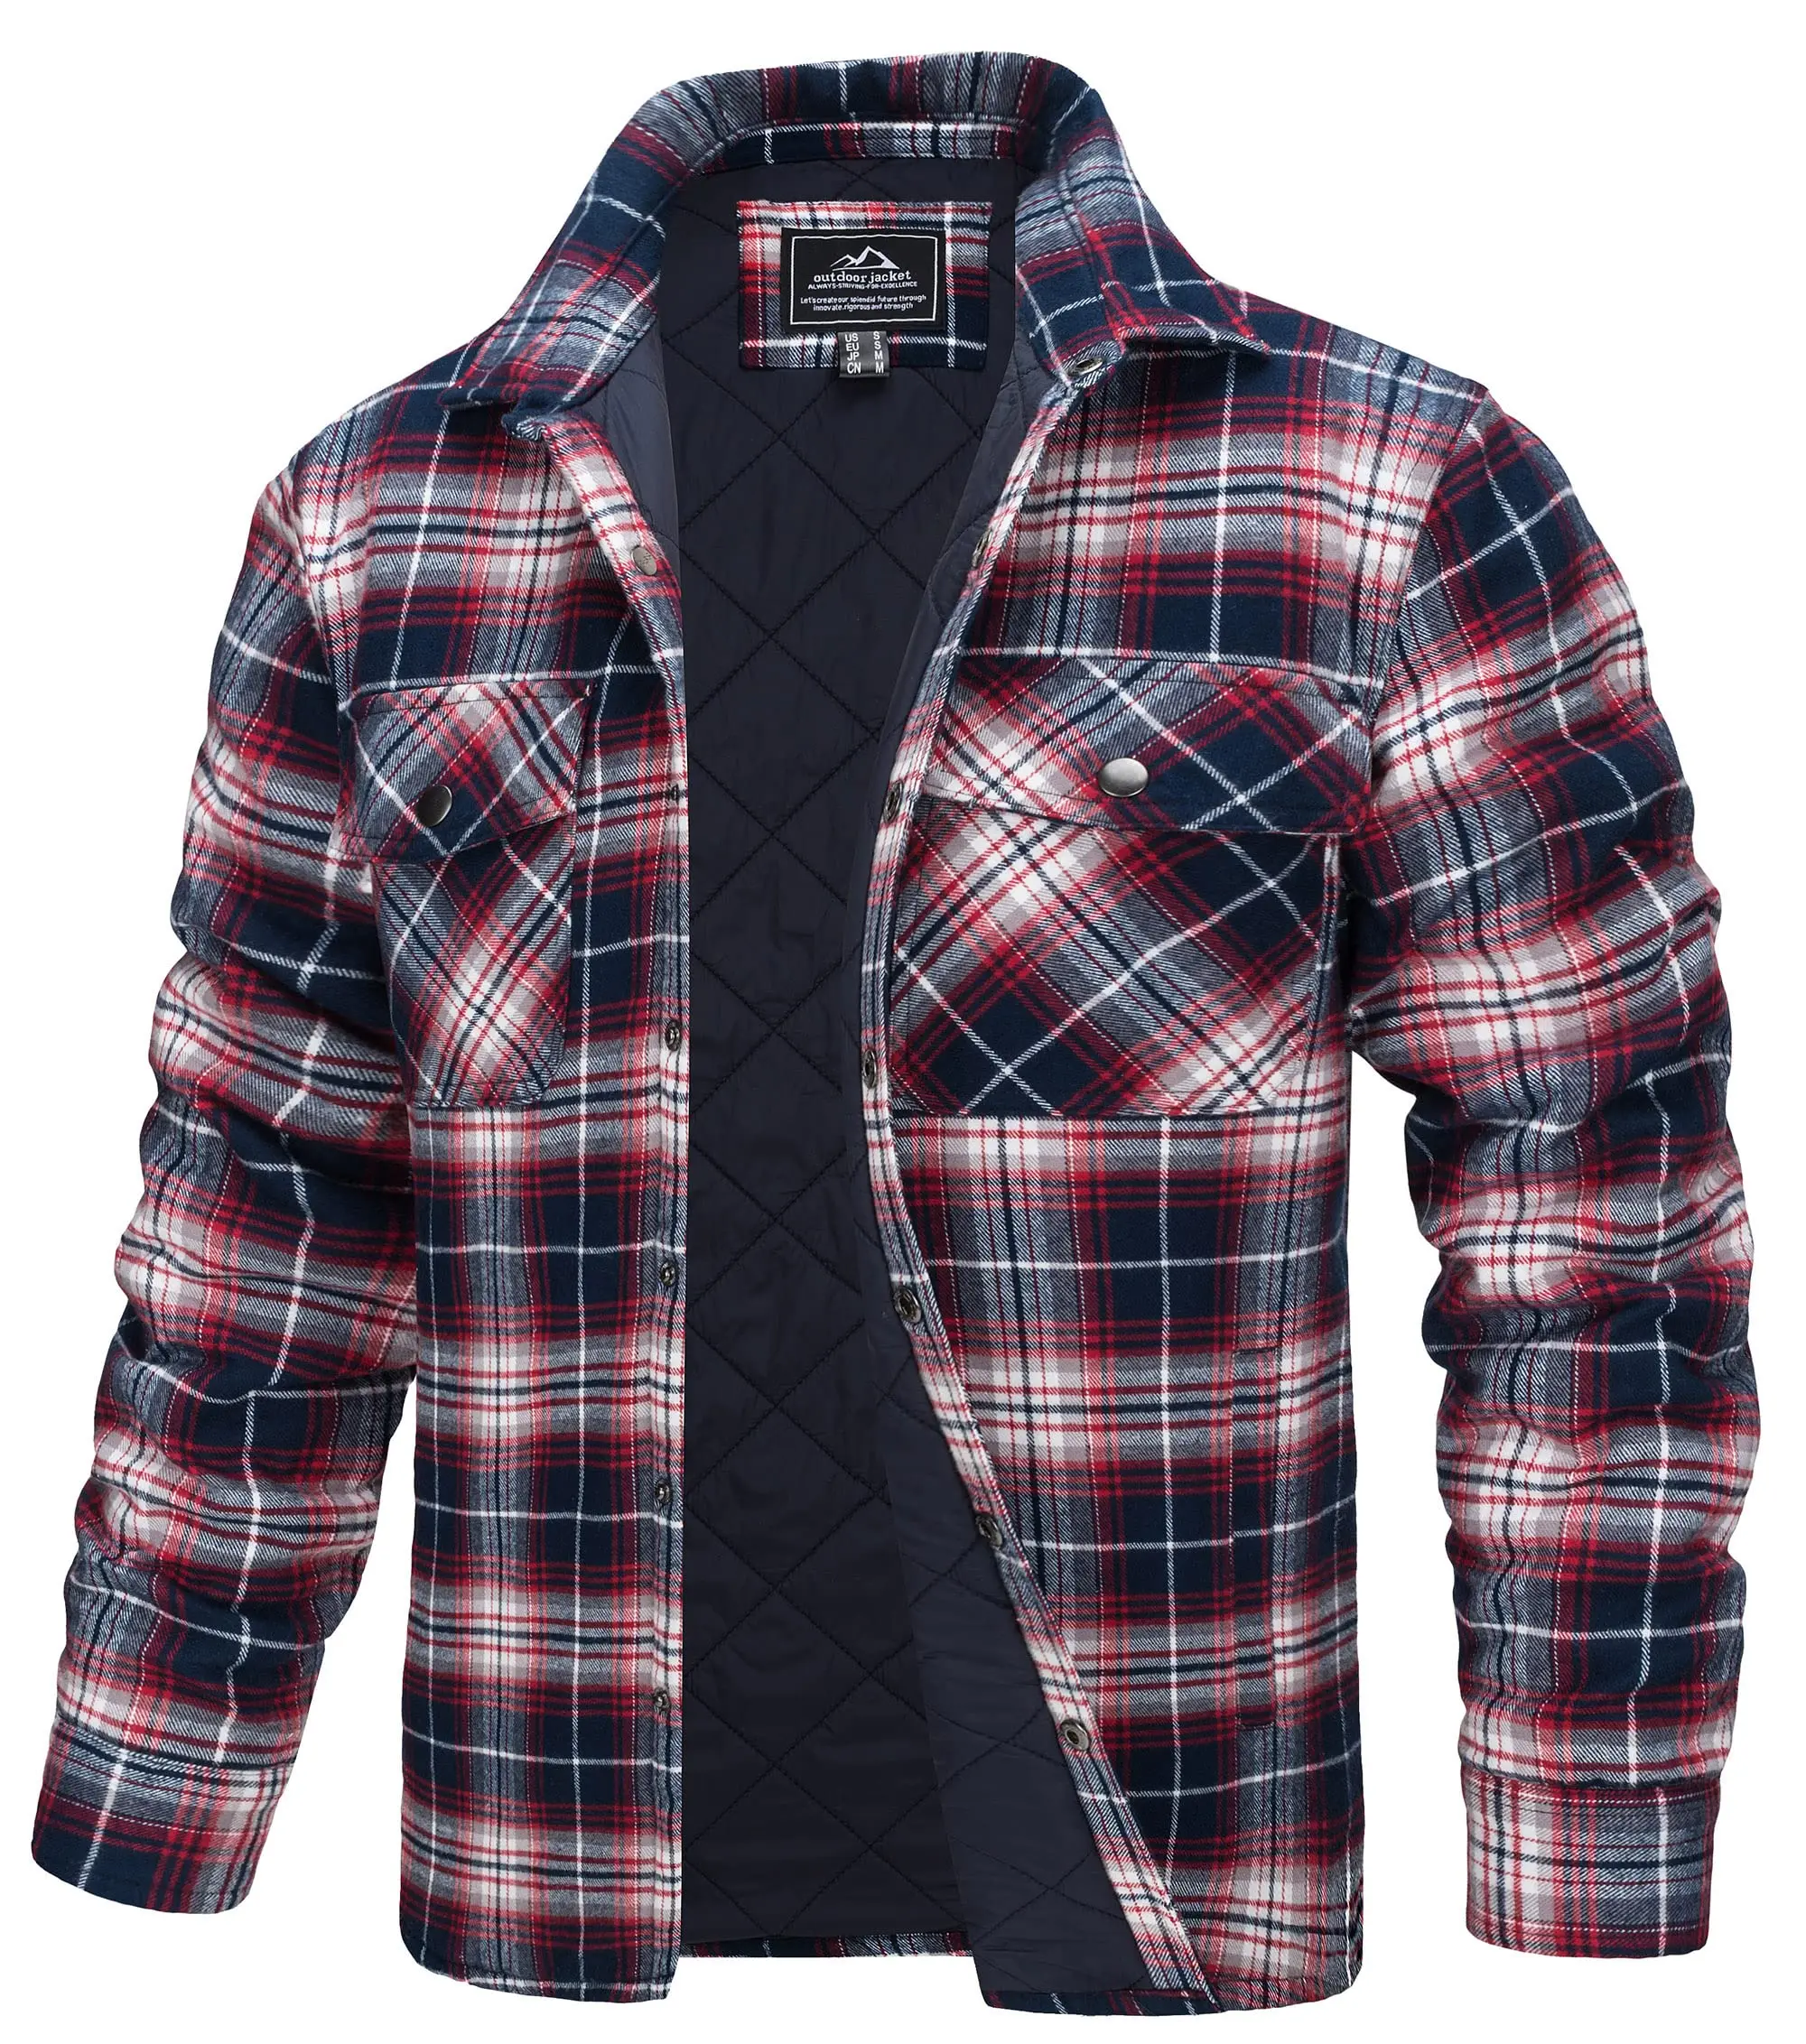 Winter Fashion 2022 Casual Flannel Shirt Jacket Multi-Pockets Outwear Mens Long Sleeve Plaid Cotton Lined Jackets Hiking Coats